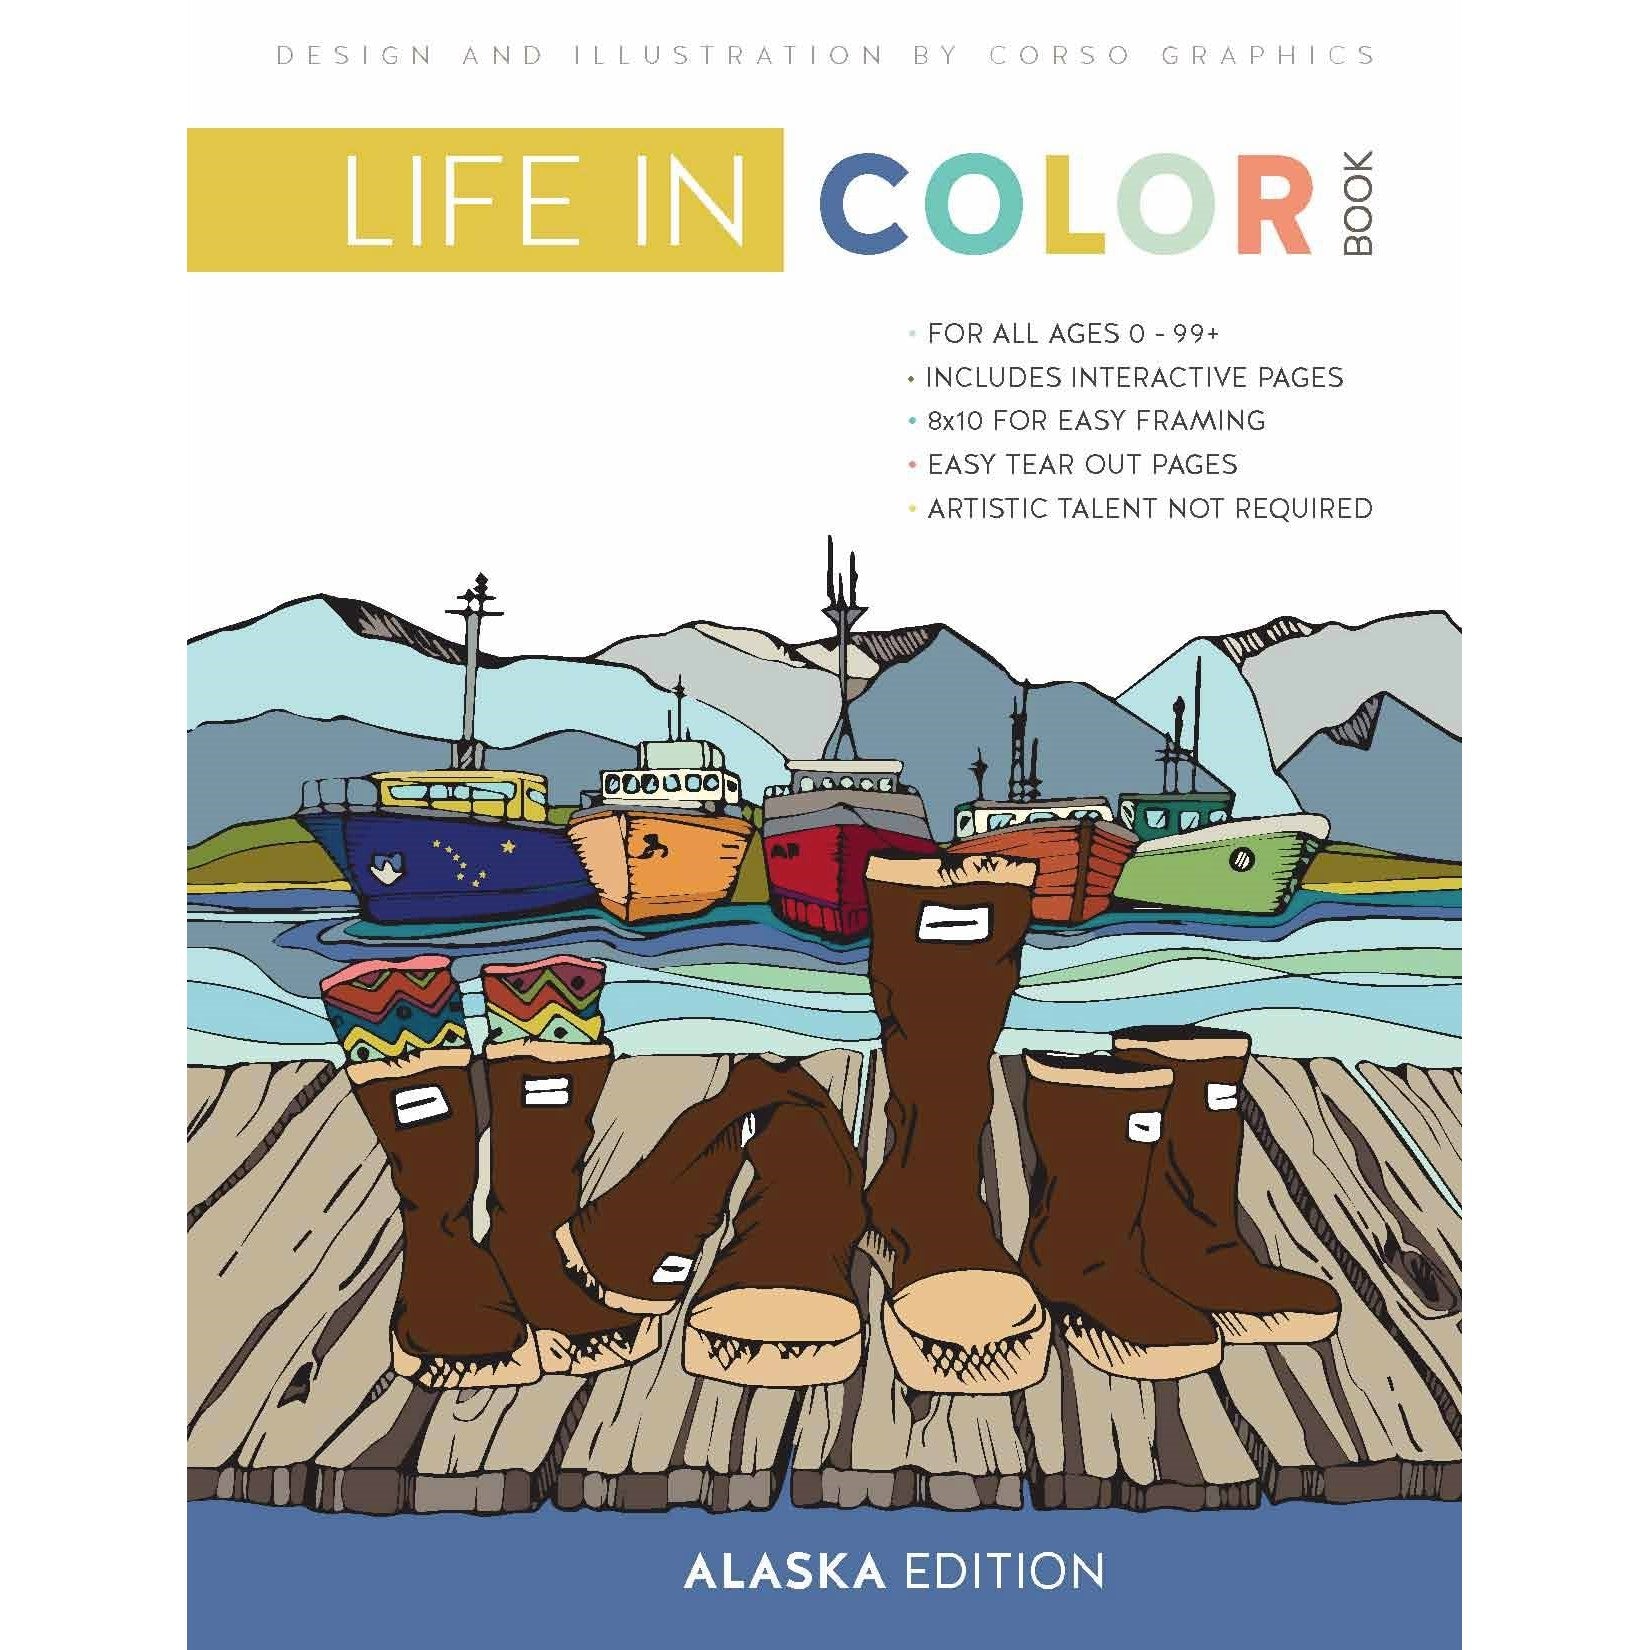 Life in Coloring Men's Coloring Book Kit Review